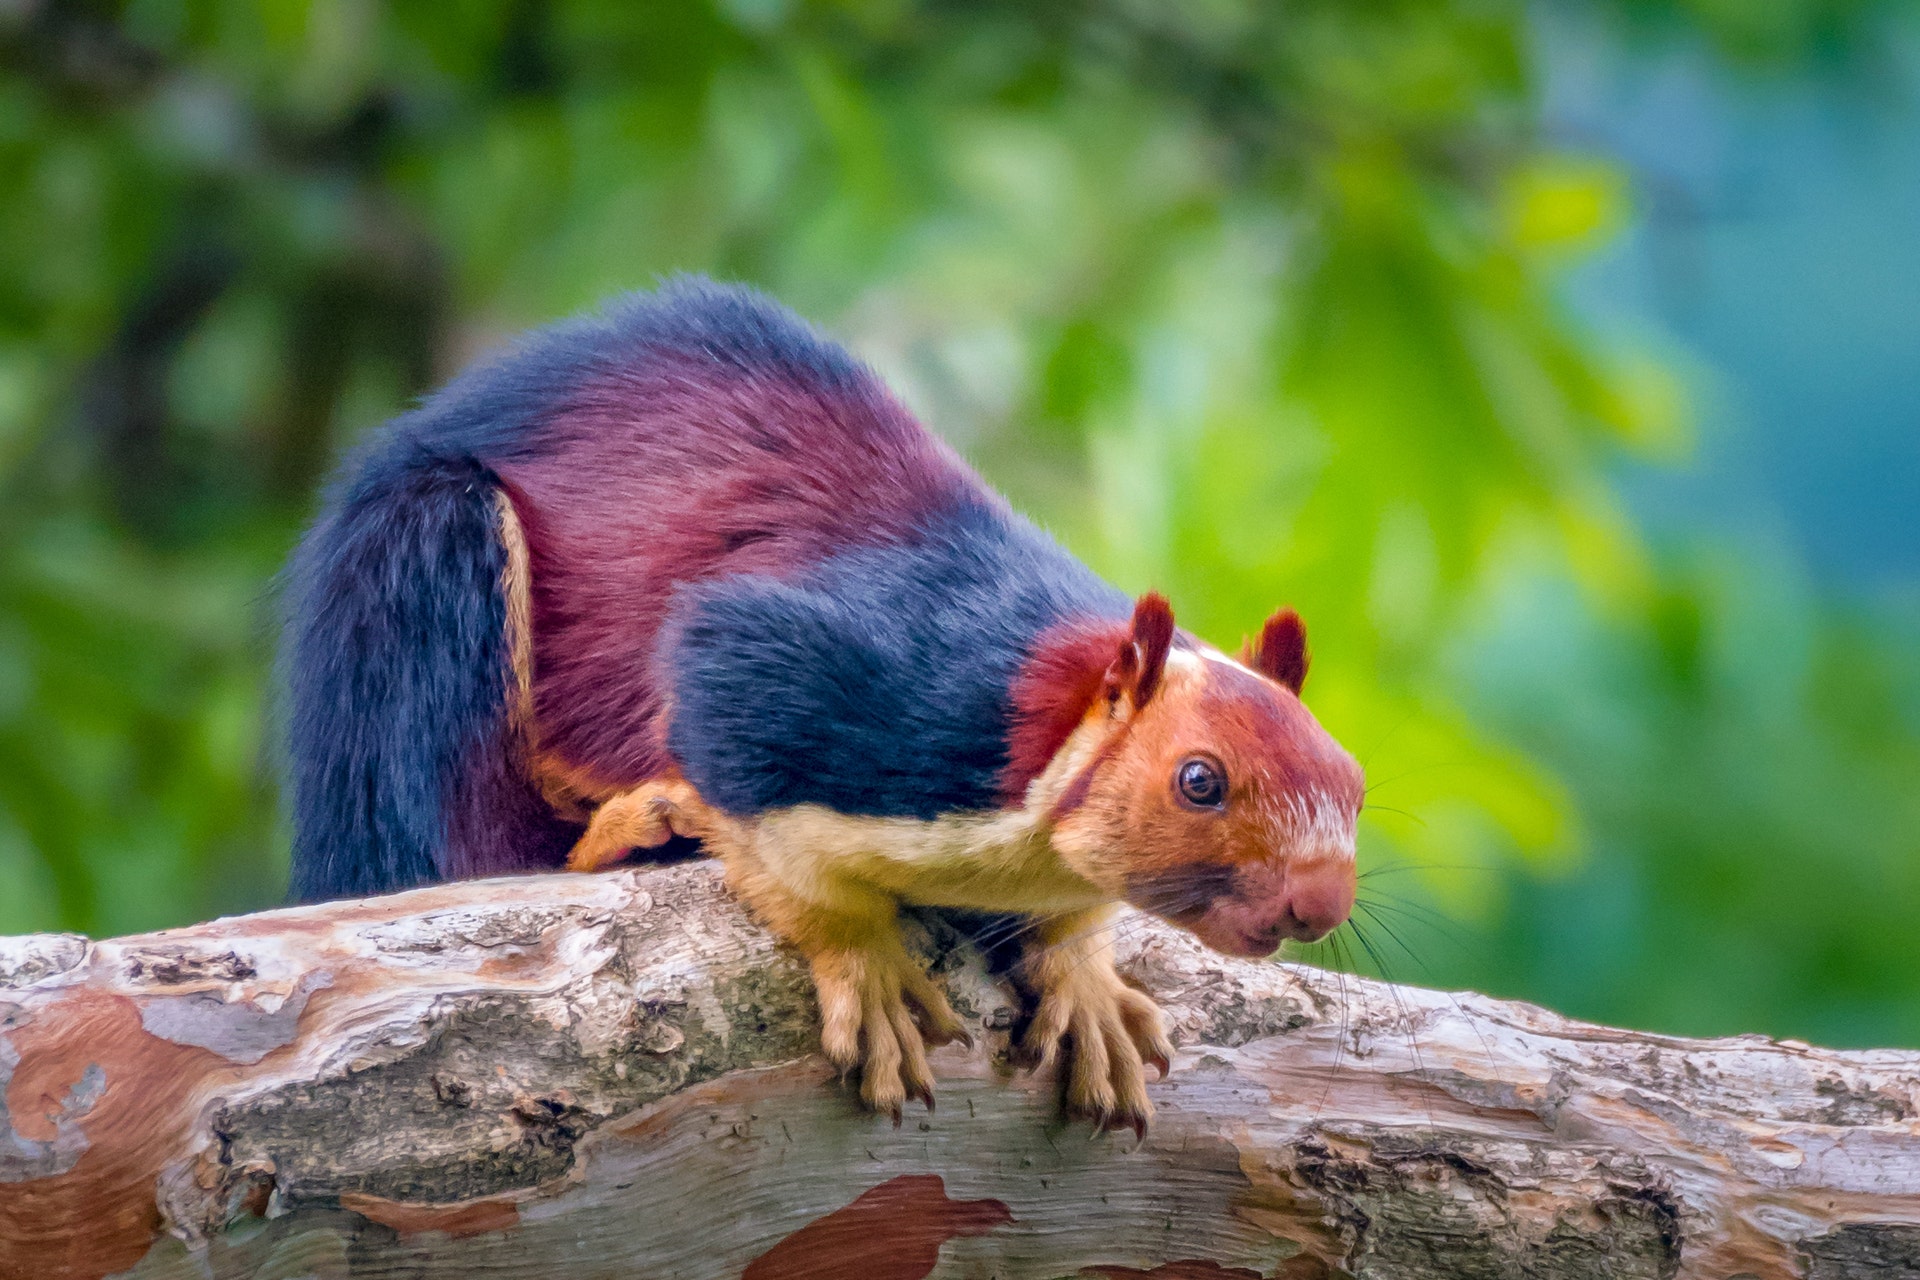 Amazing giant multicolored squirrels caught on camera,